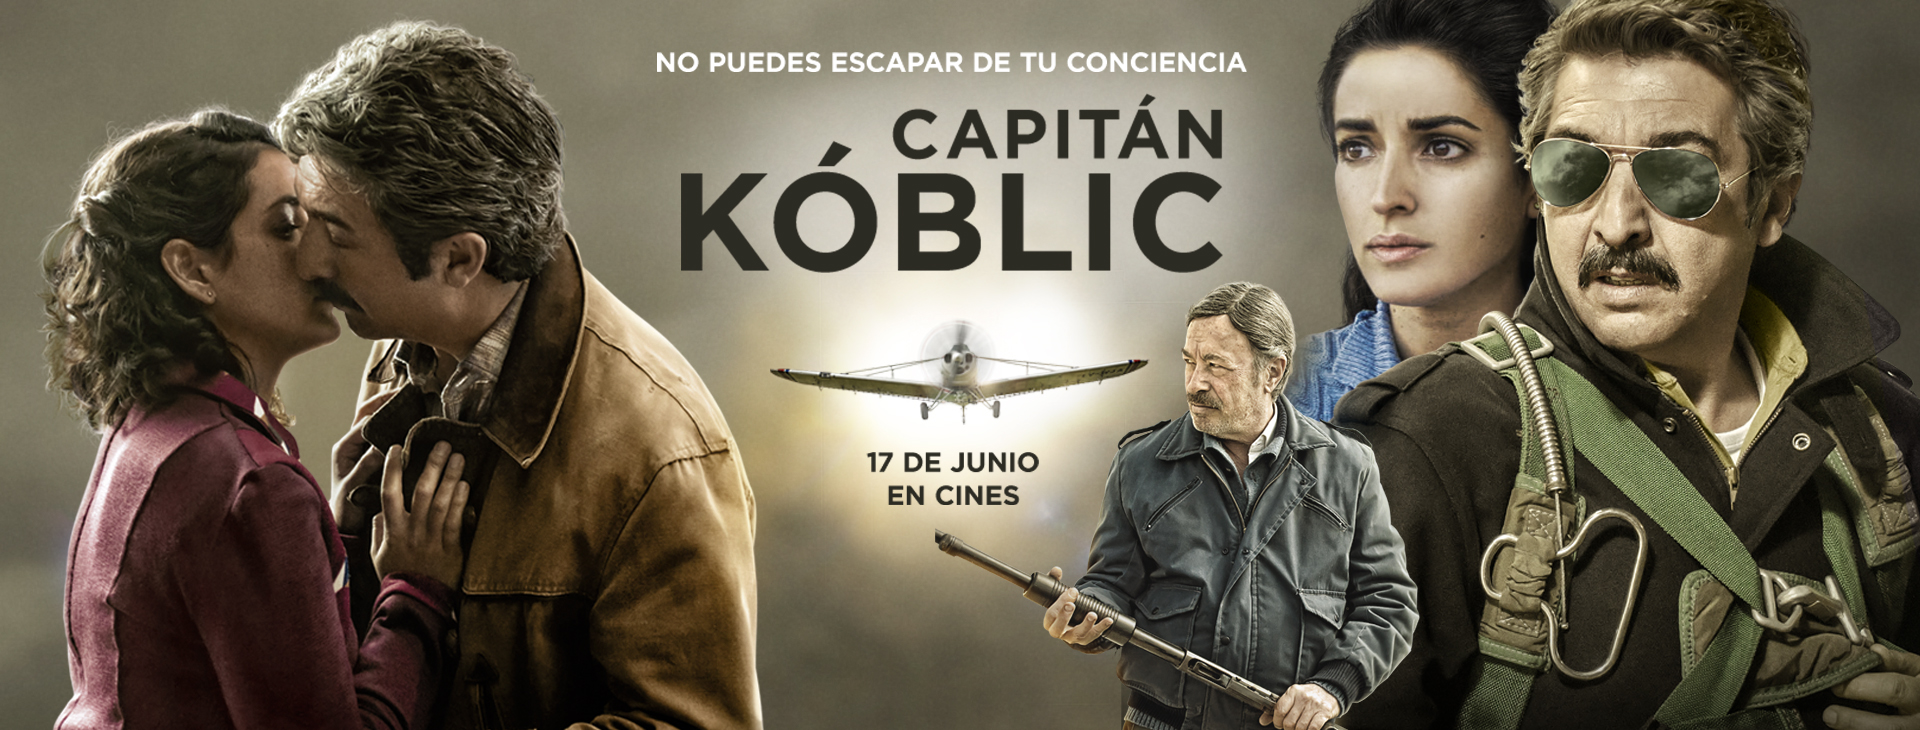 Capitán Kóblic en Cantones Cines de A Coruña